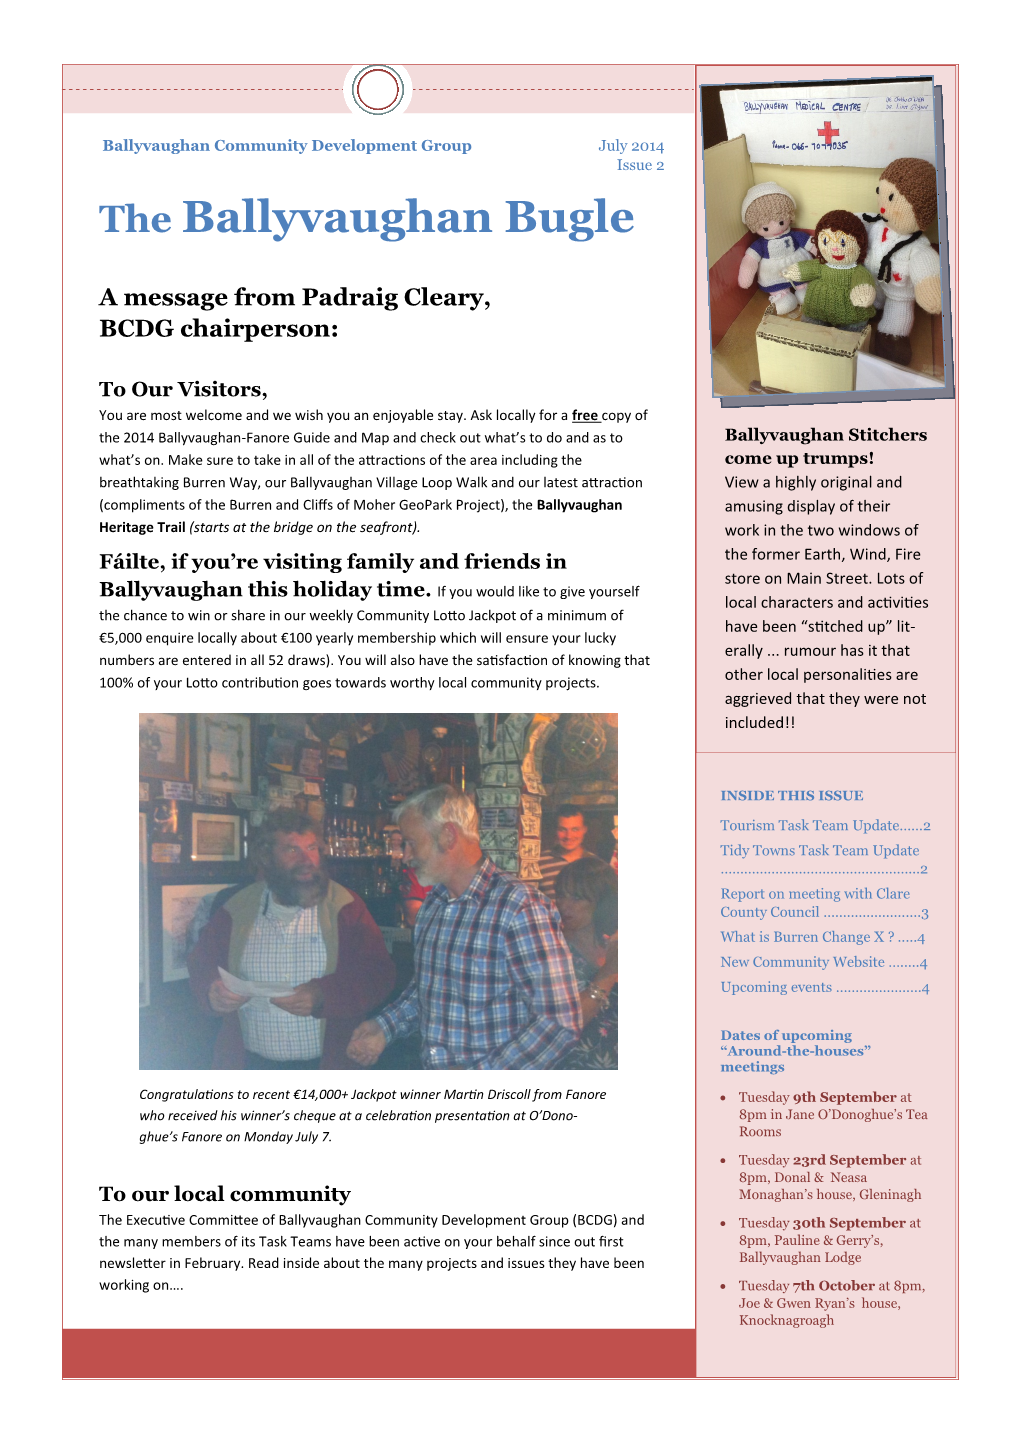 The Ballyvaughan Bugle